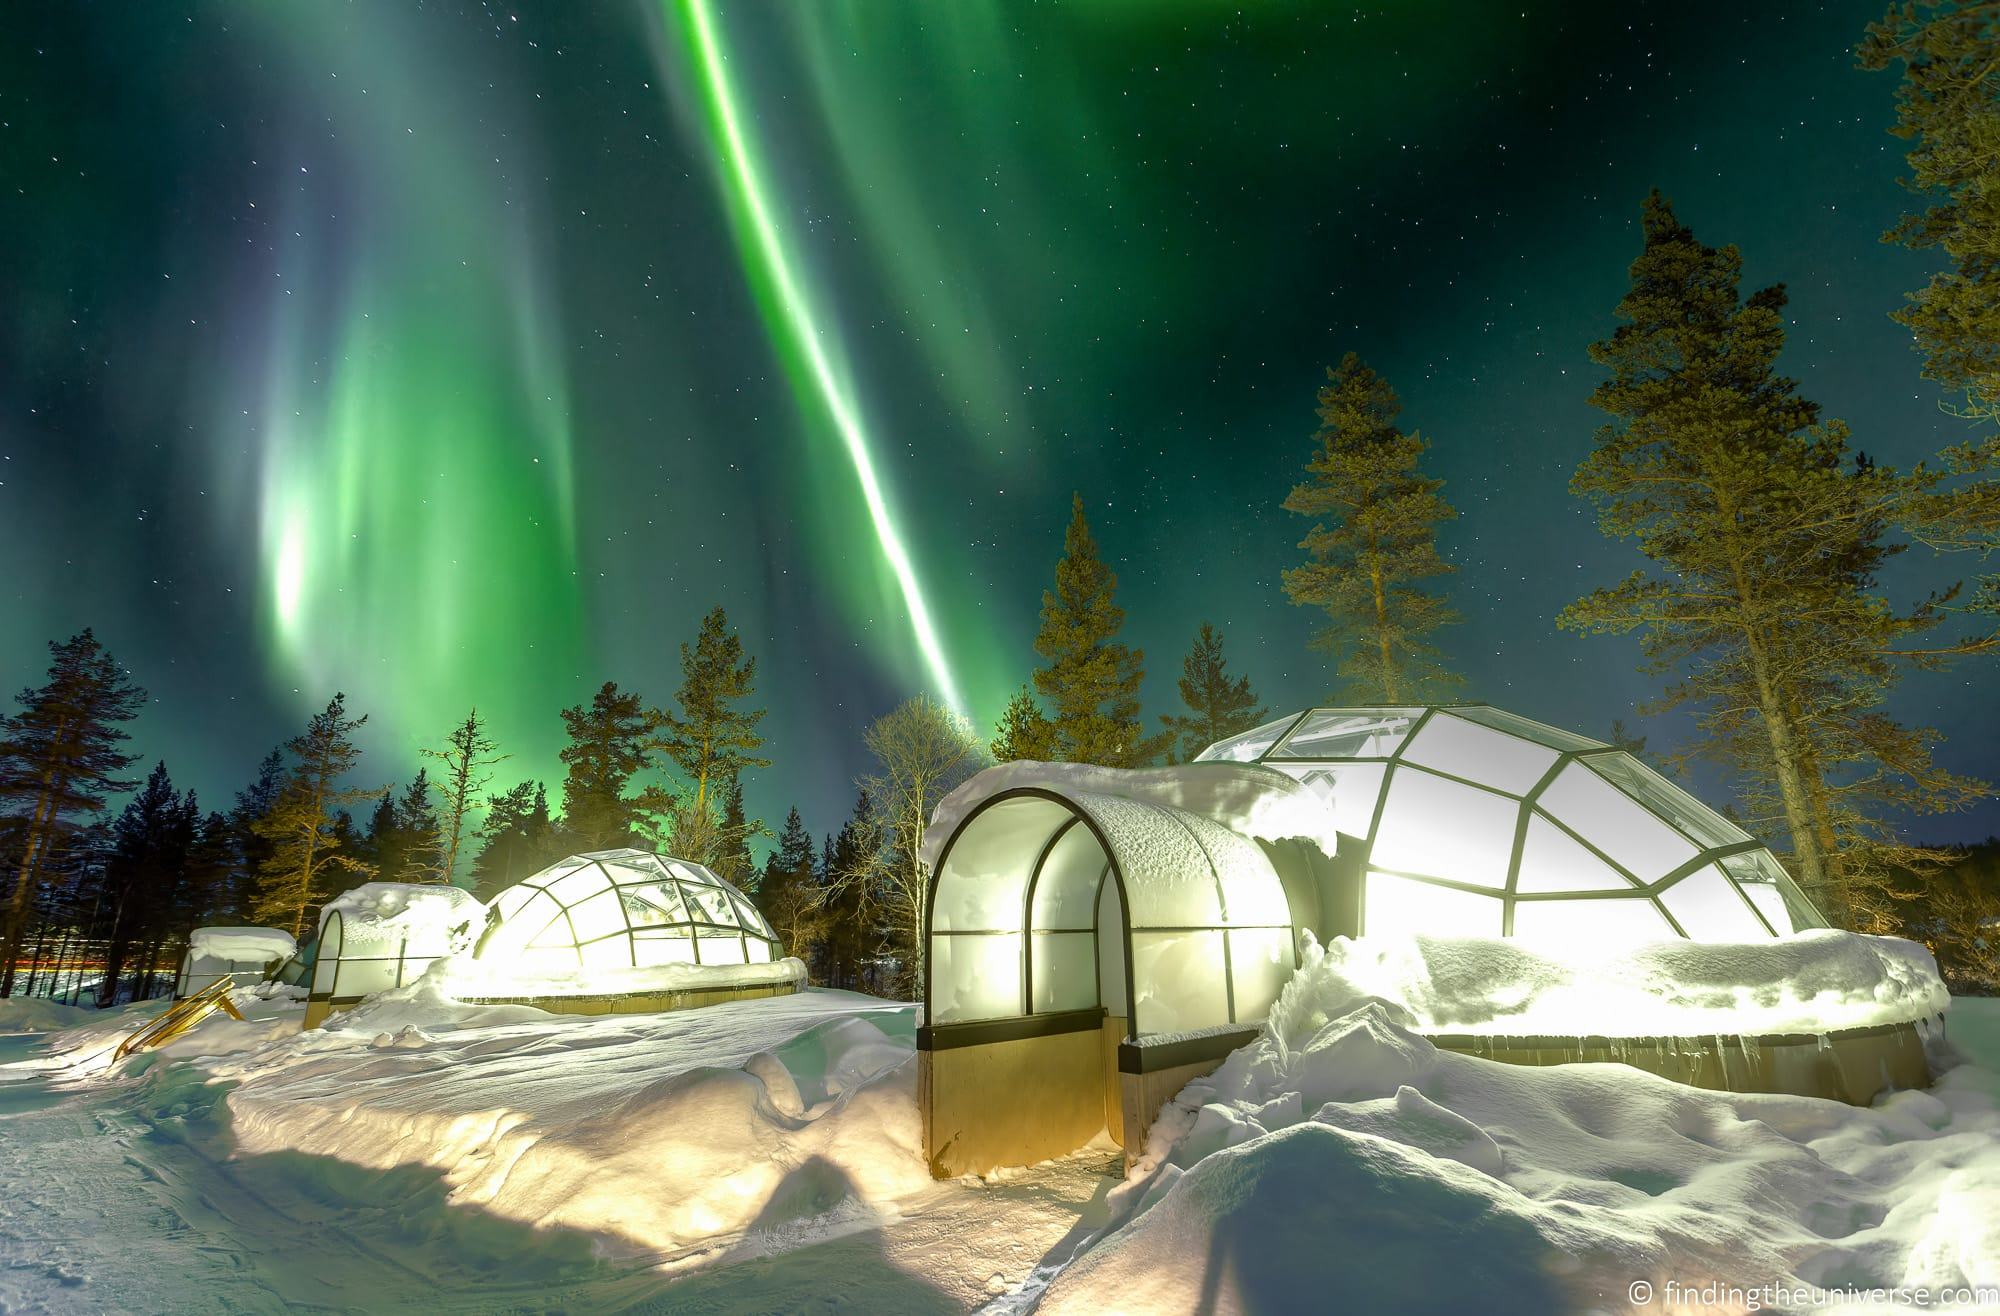 Kakslauttanen Arctic Resort Finland - Review of this Glass Igloo Hotel